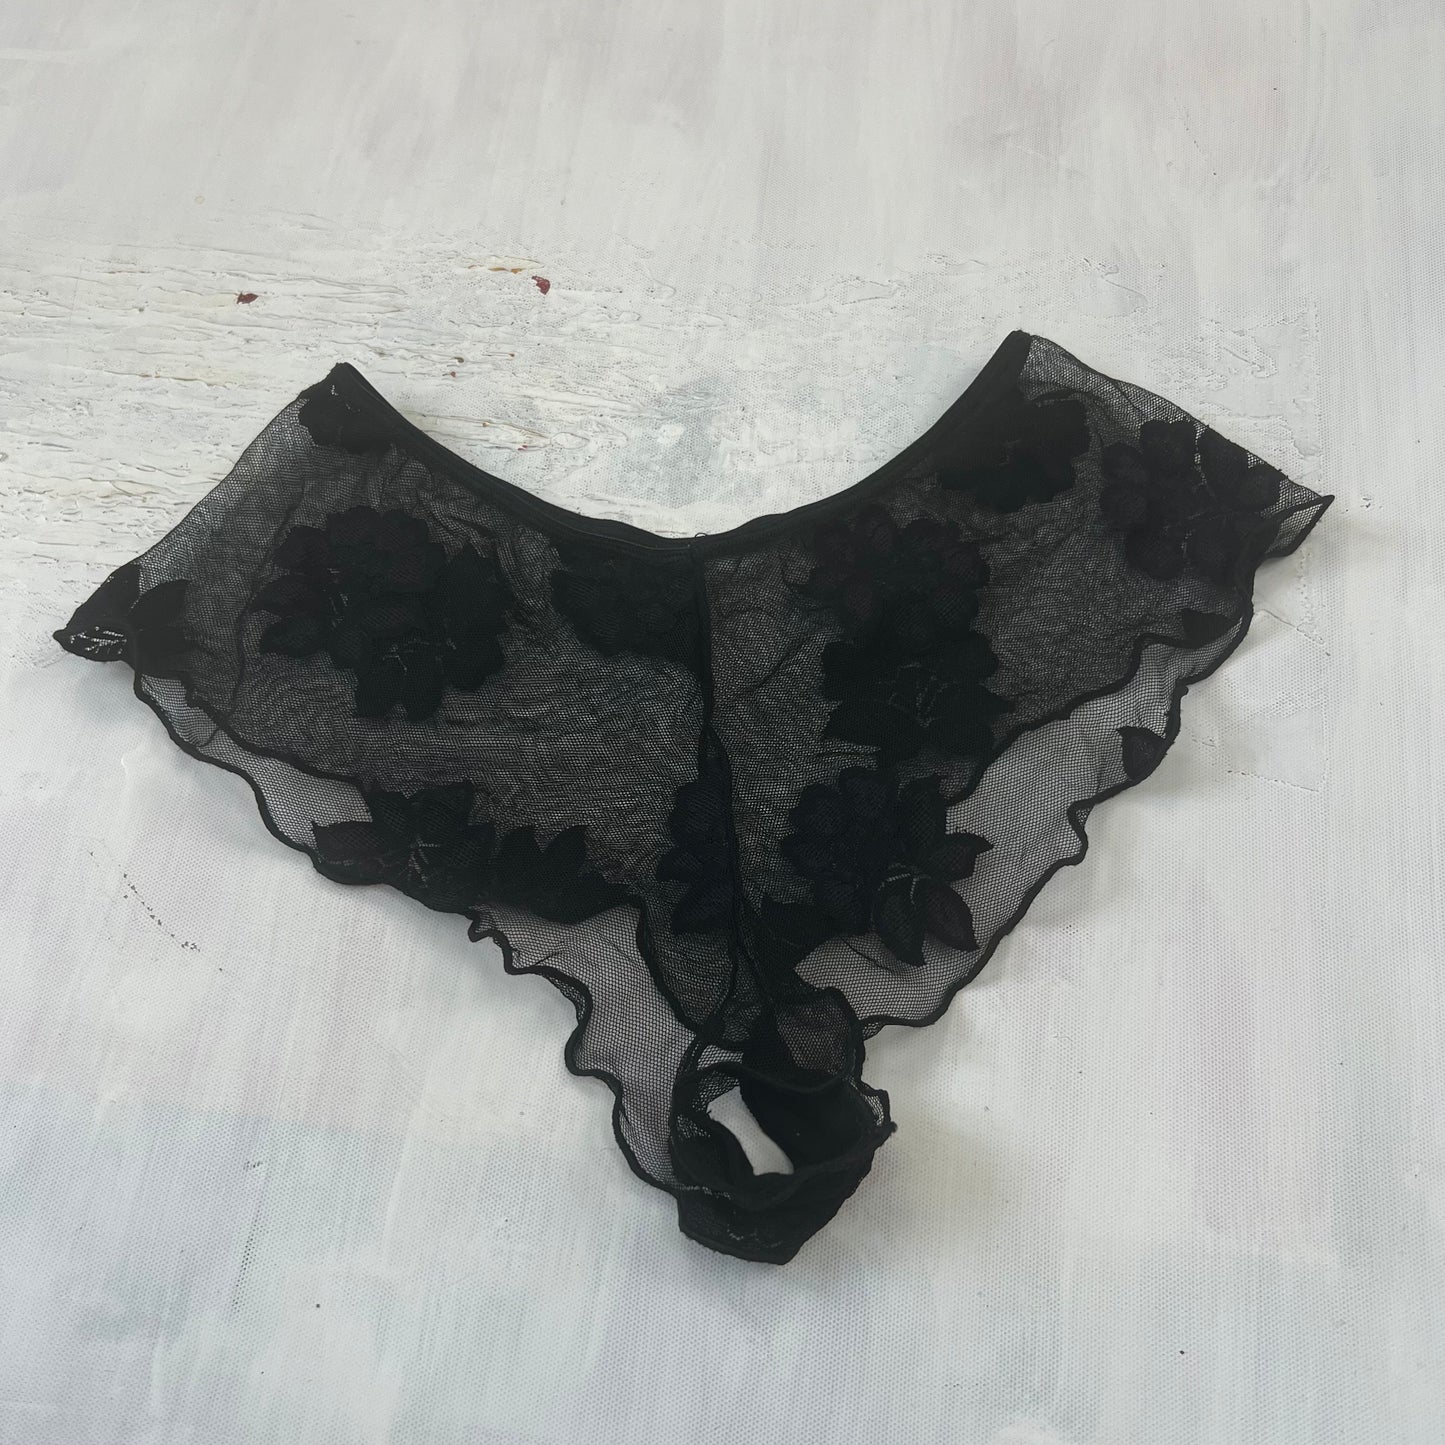 PROM SEASON DROP | small black brief underwear with floral pattern